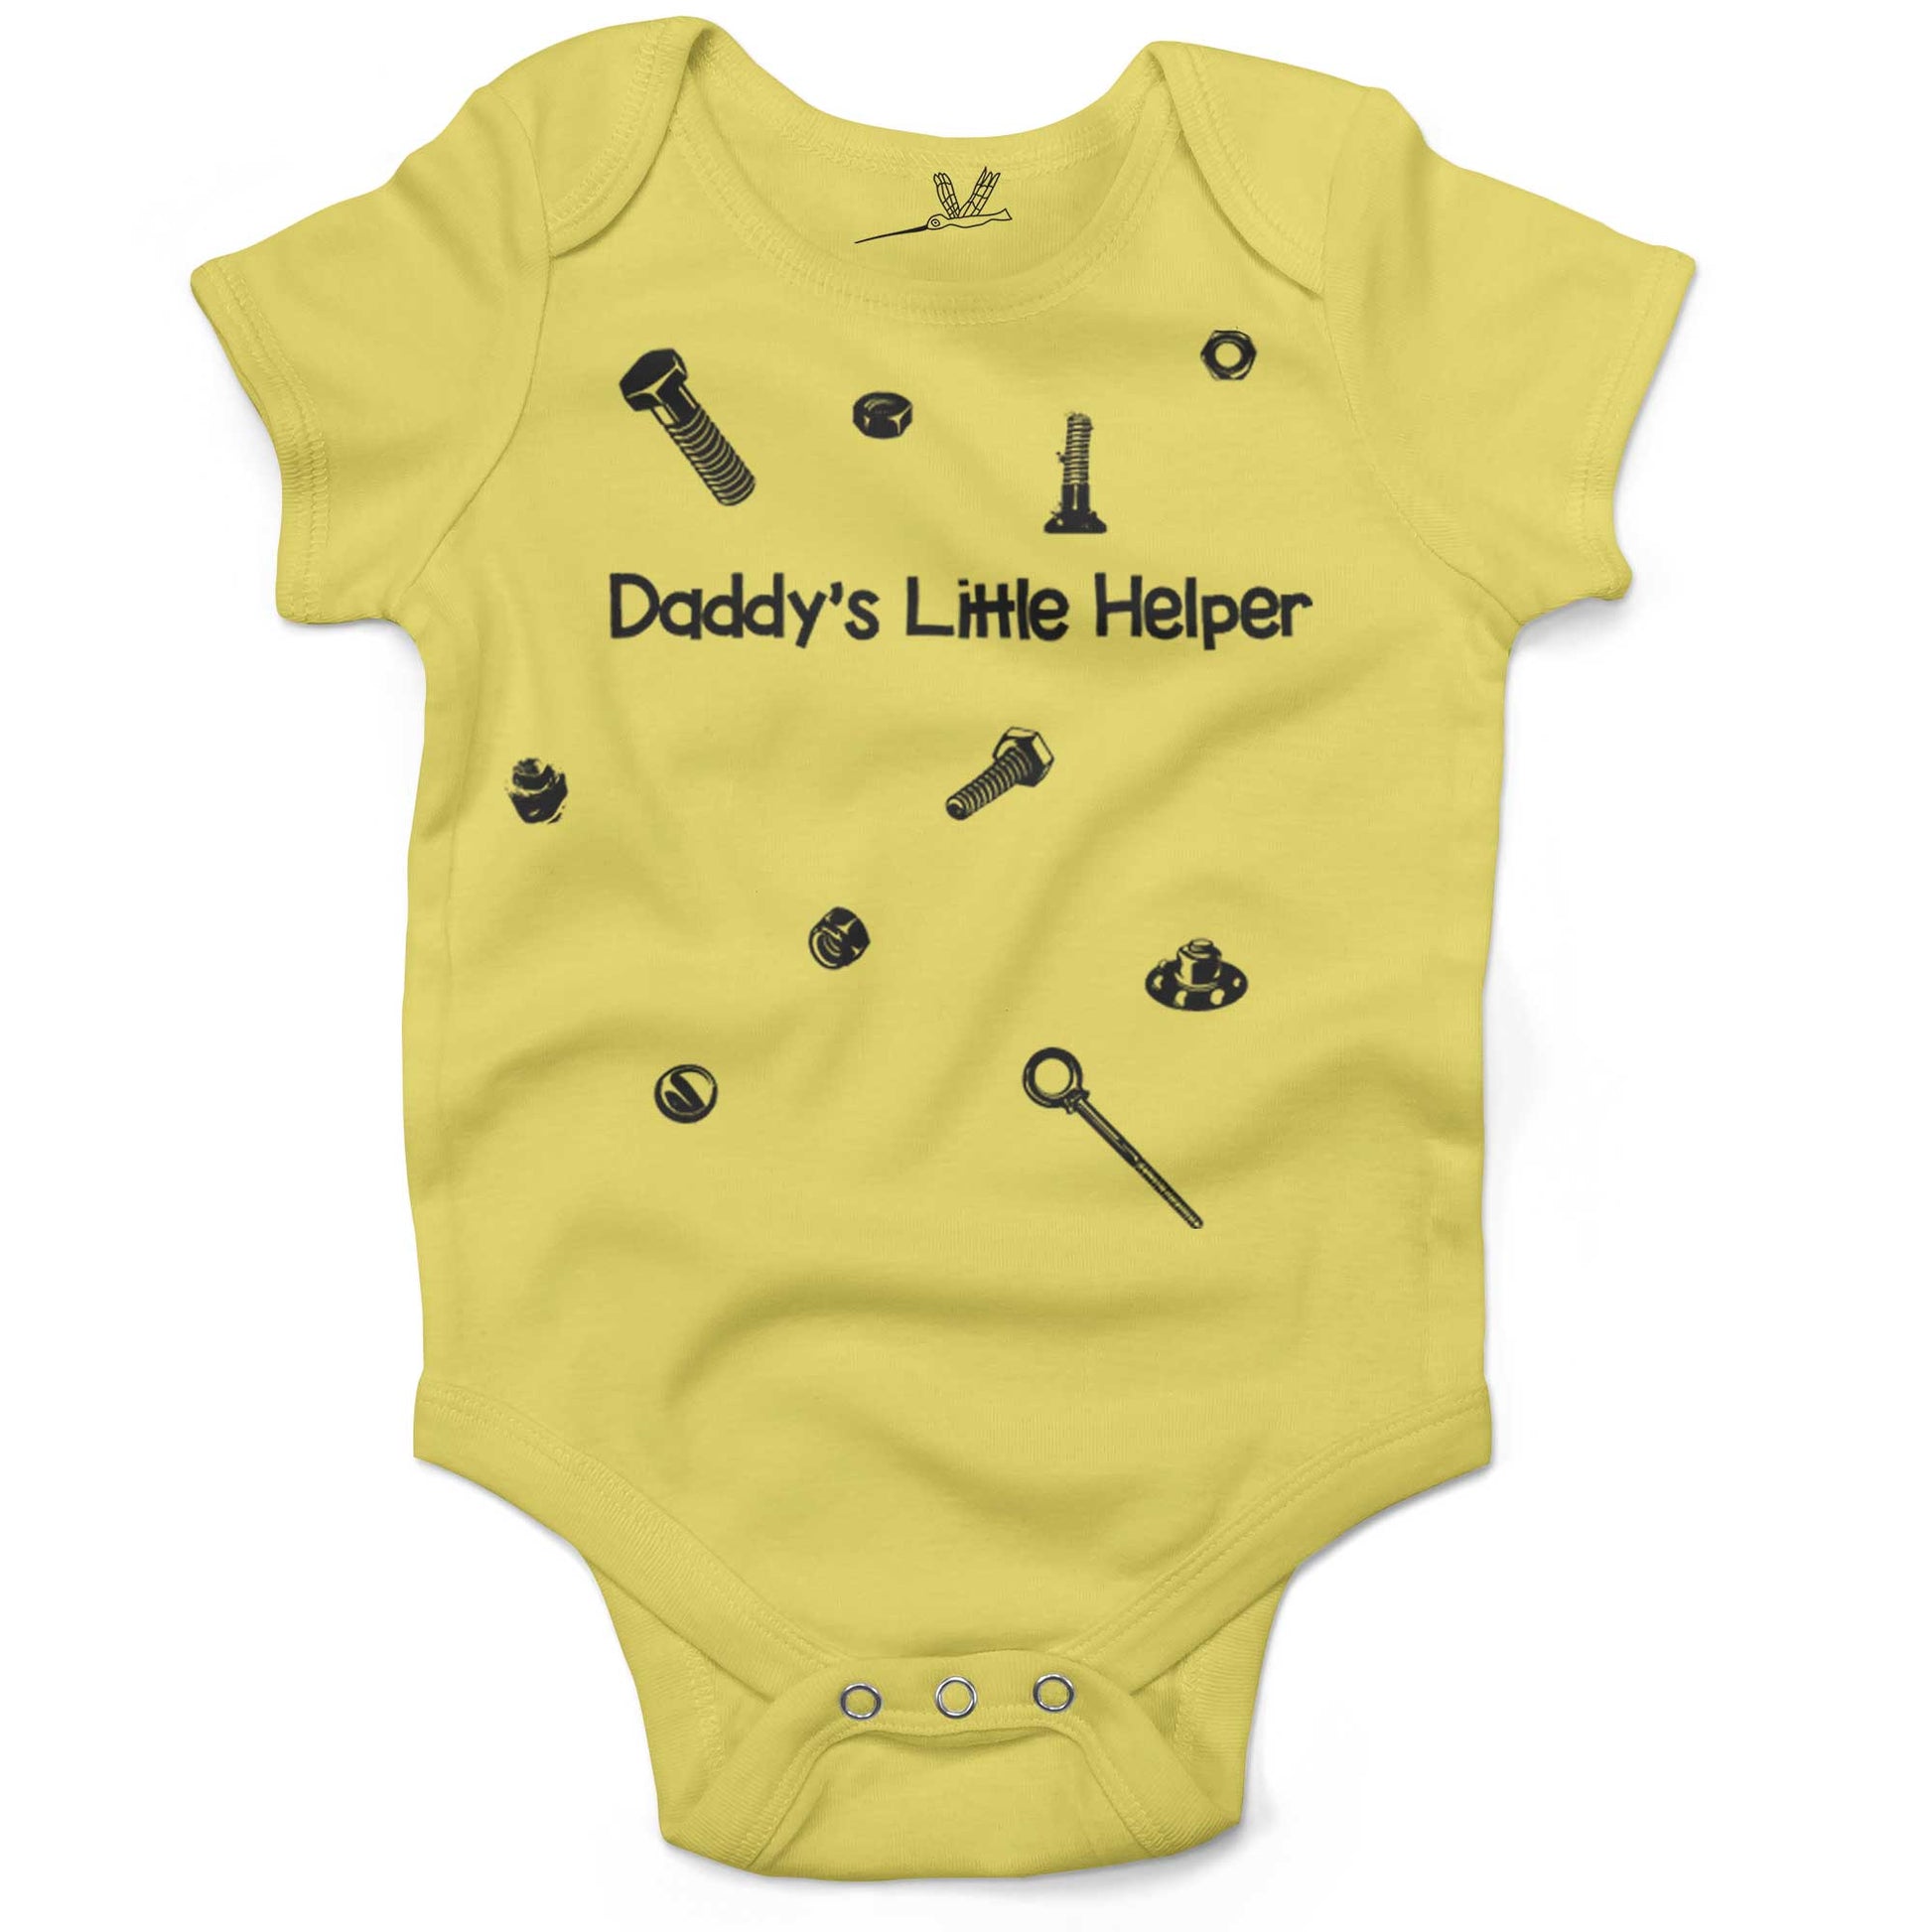 Daddy's Little Helper Infant Bodysuit or Raglan Baby Tee-Yellow-3-6 months